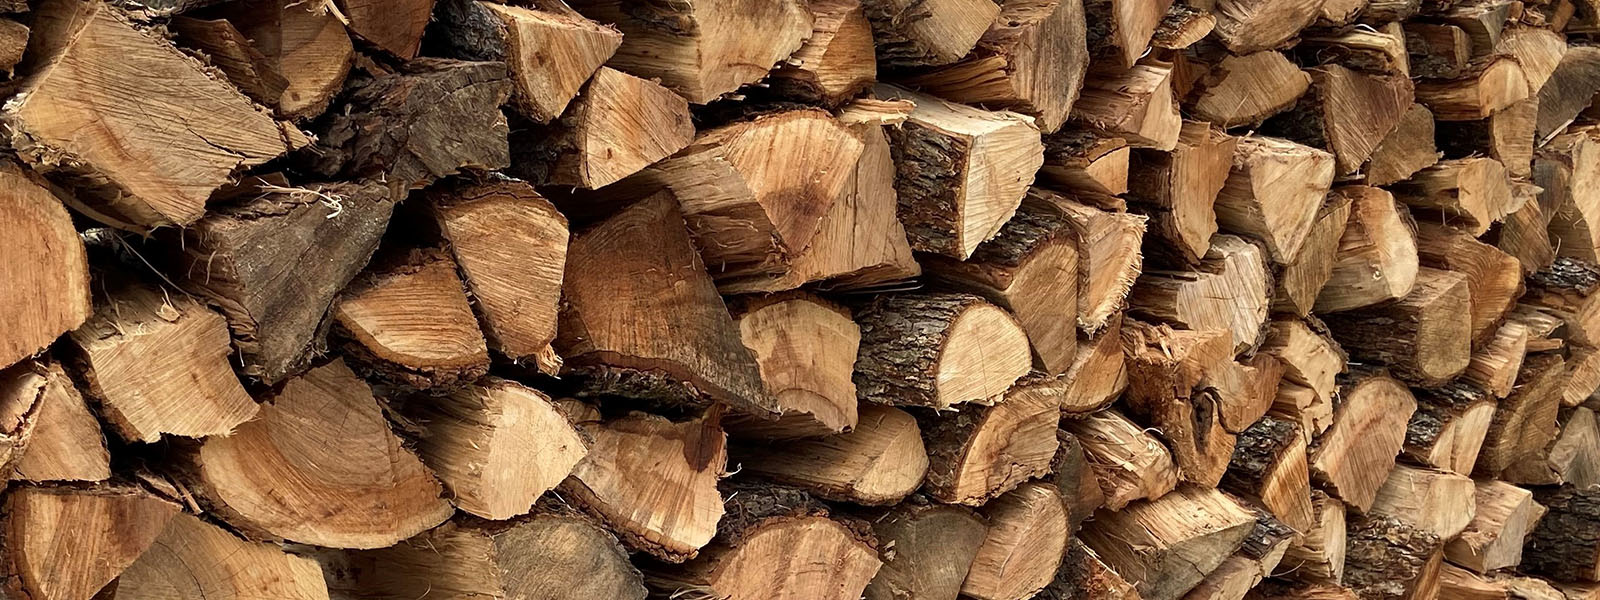 Large stack of pecan wood